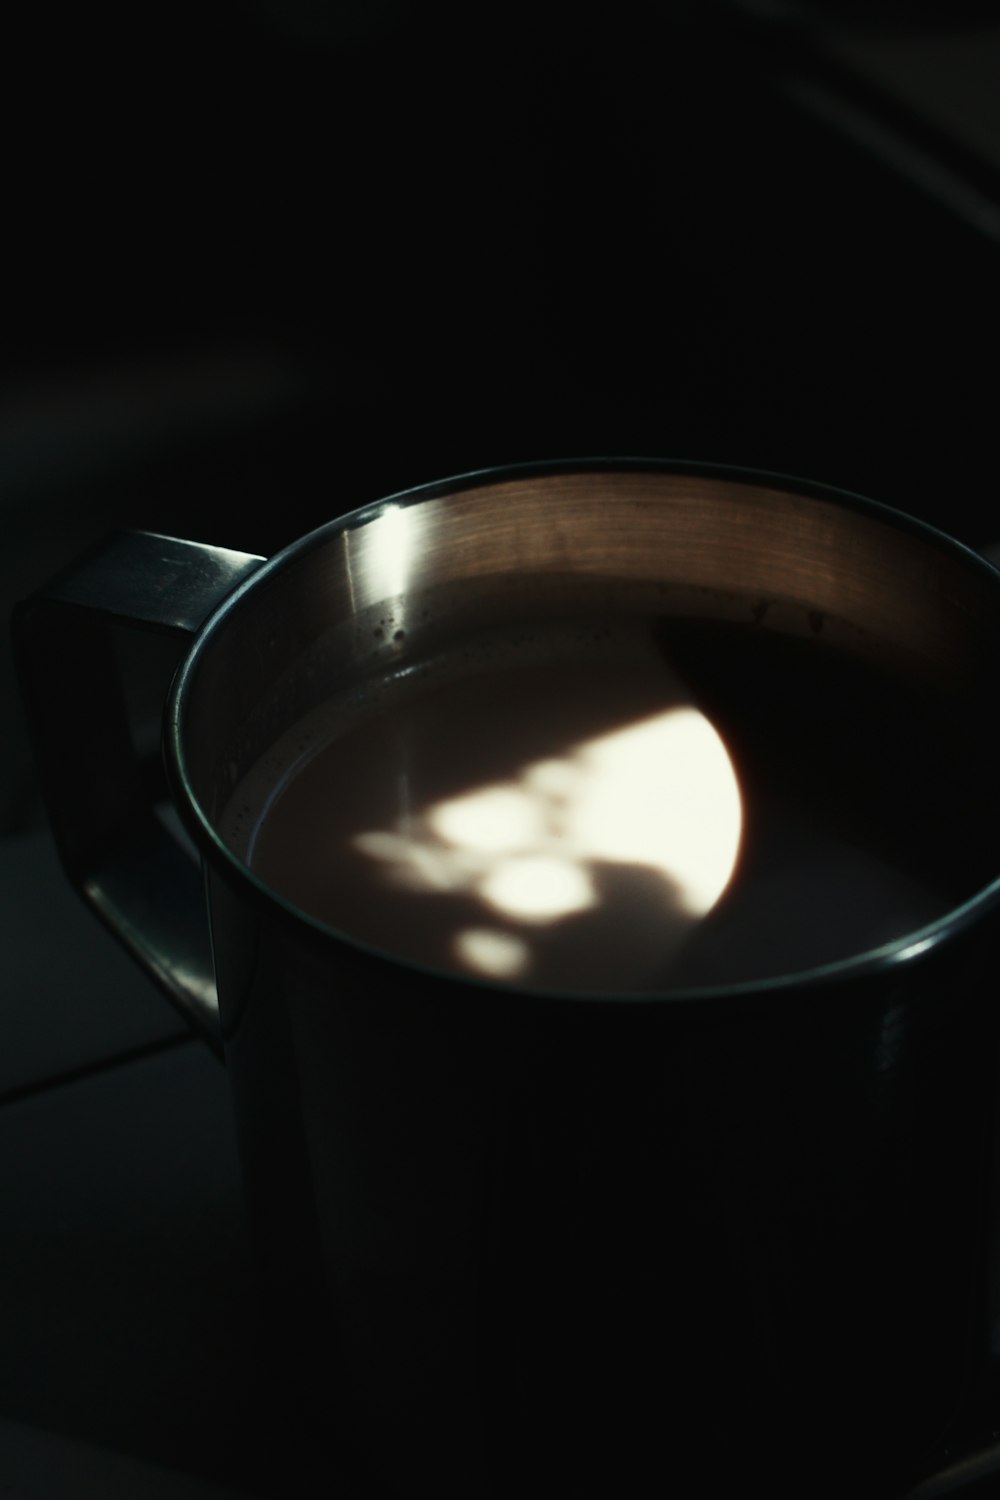 black ceramic mug with brown liquid